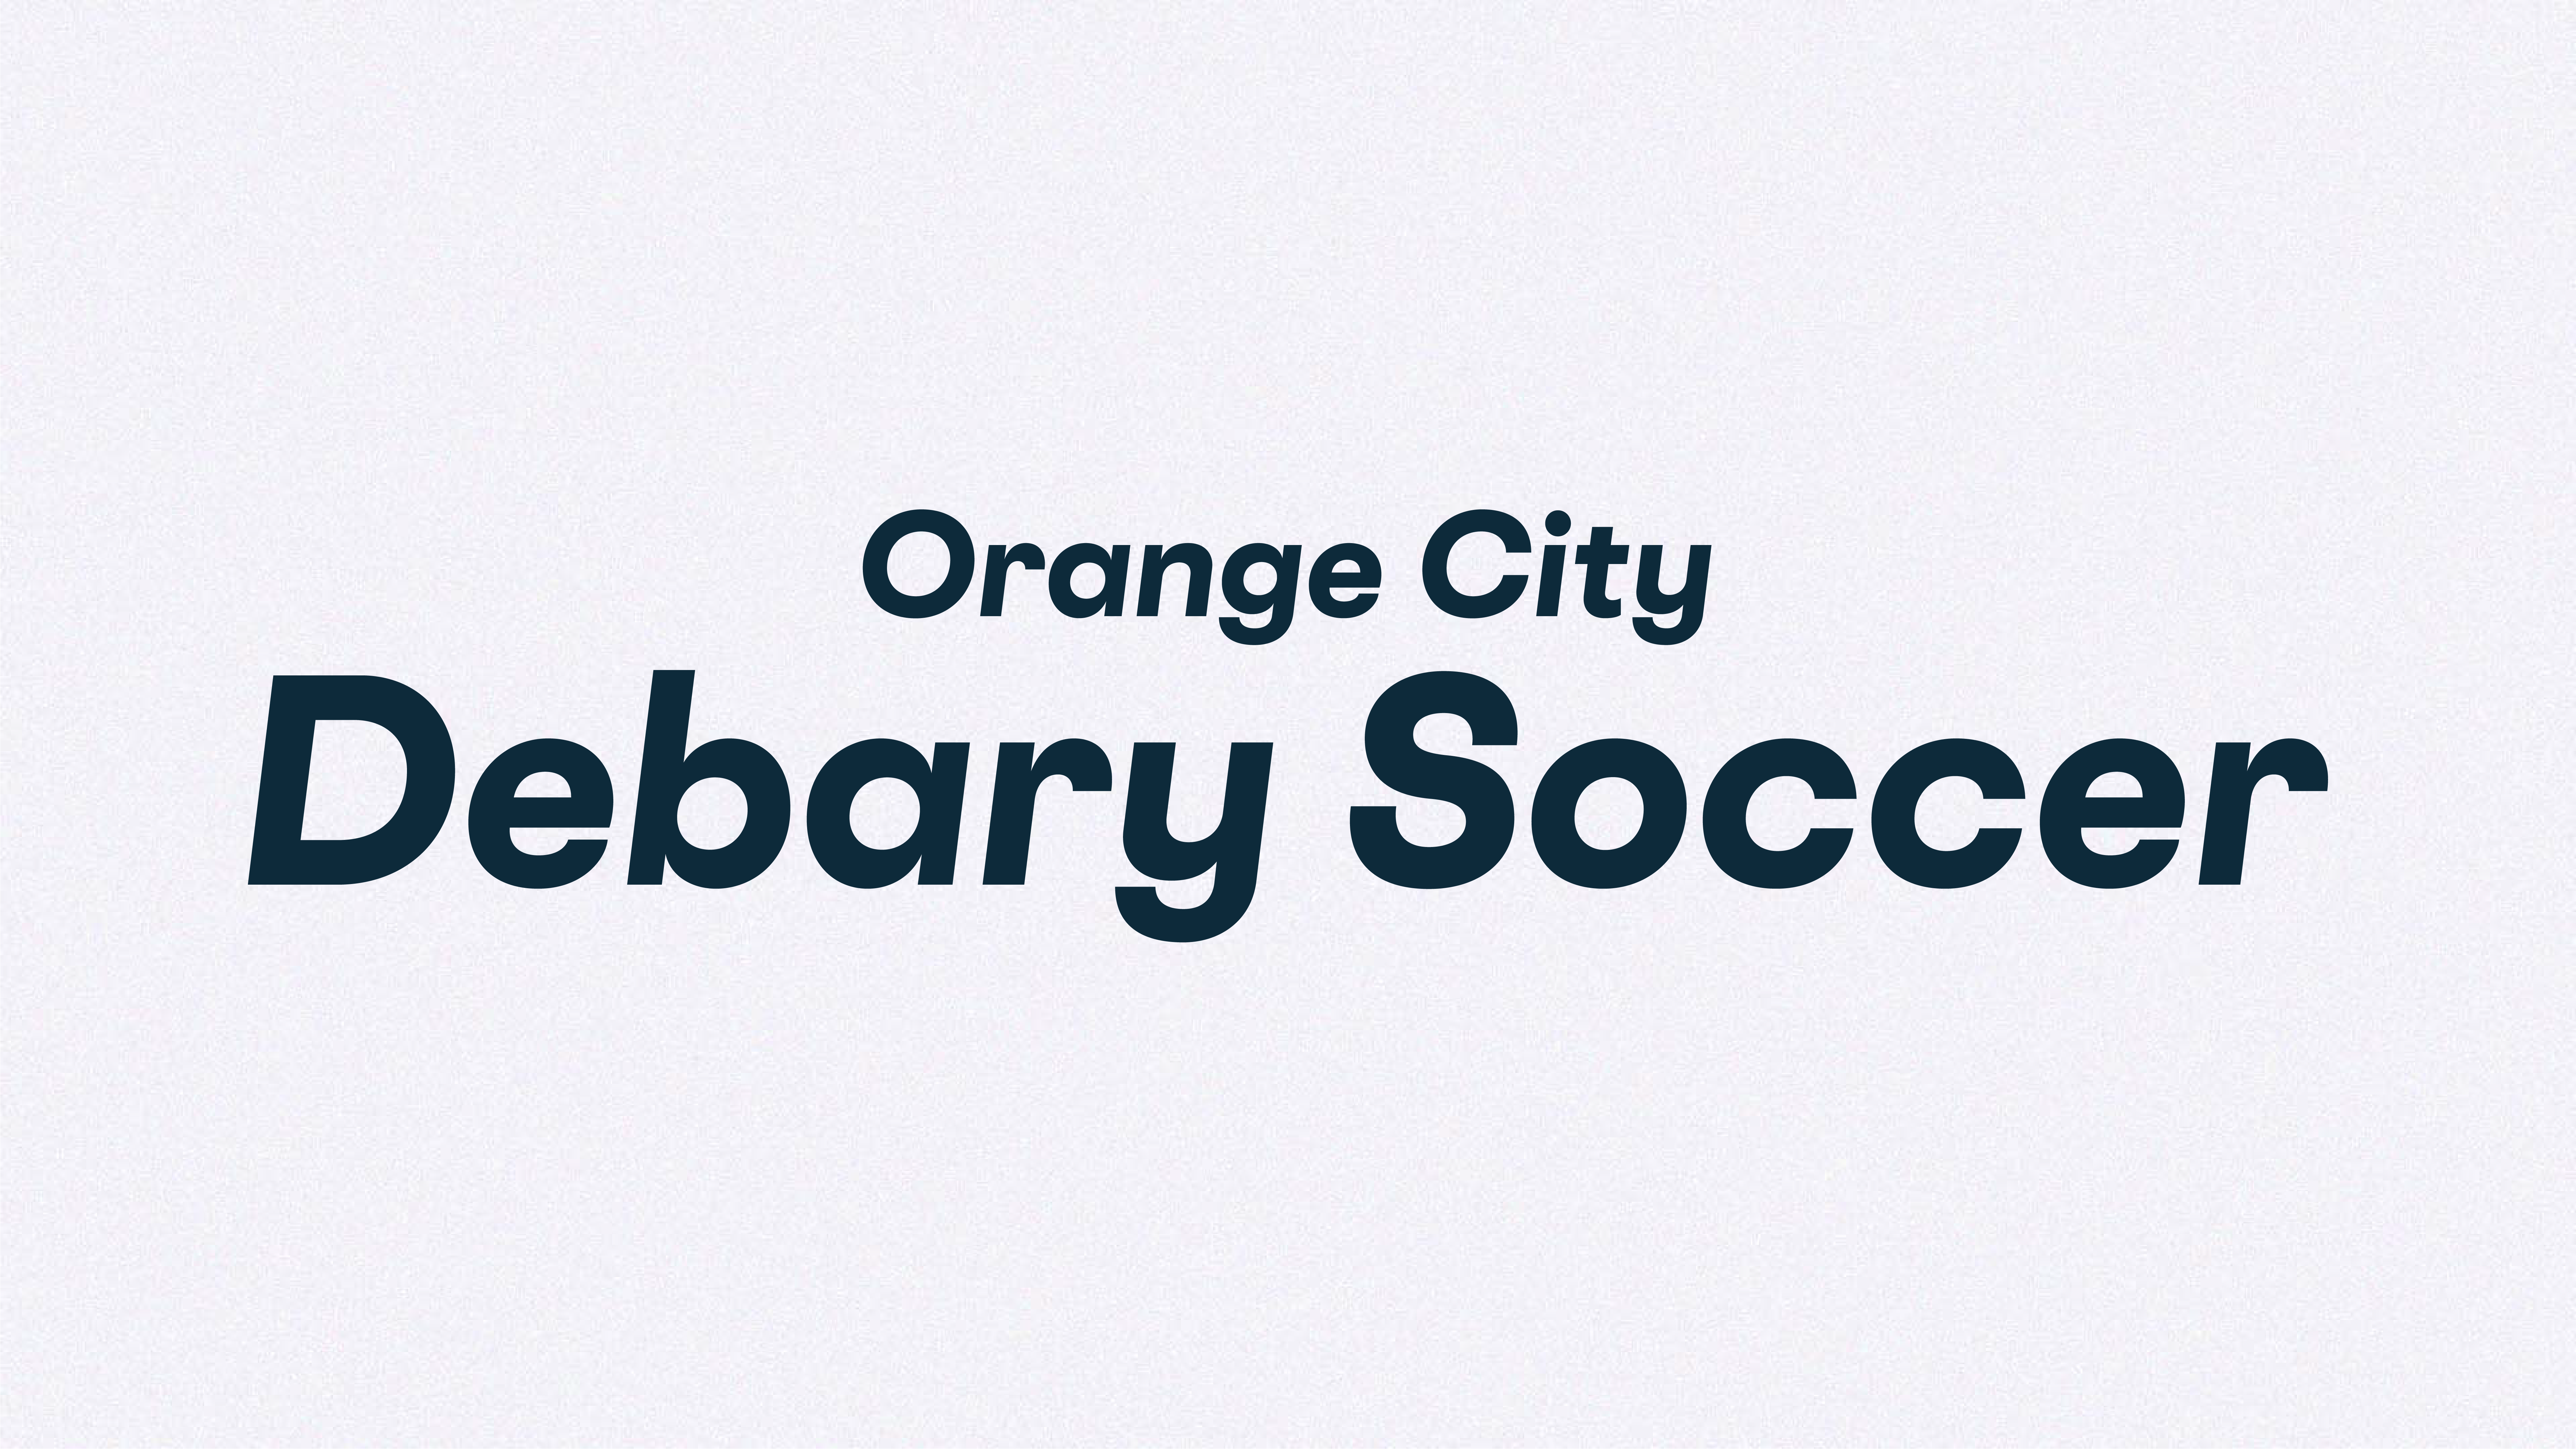 Orange City Debary Soccer